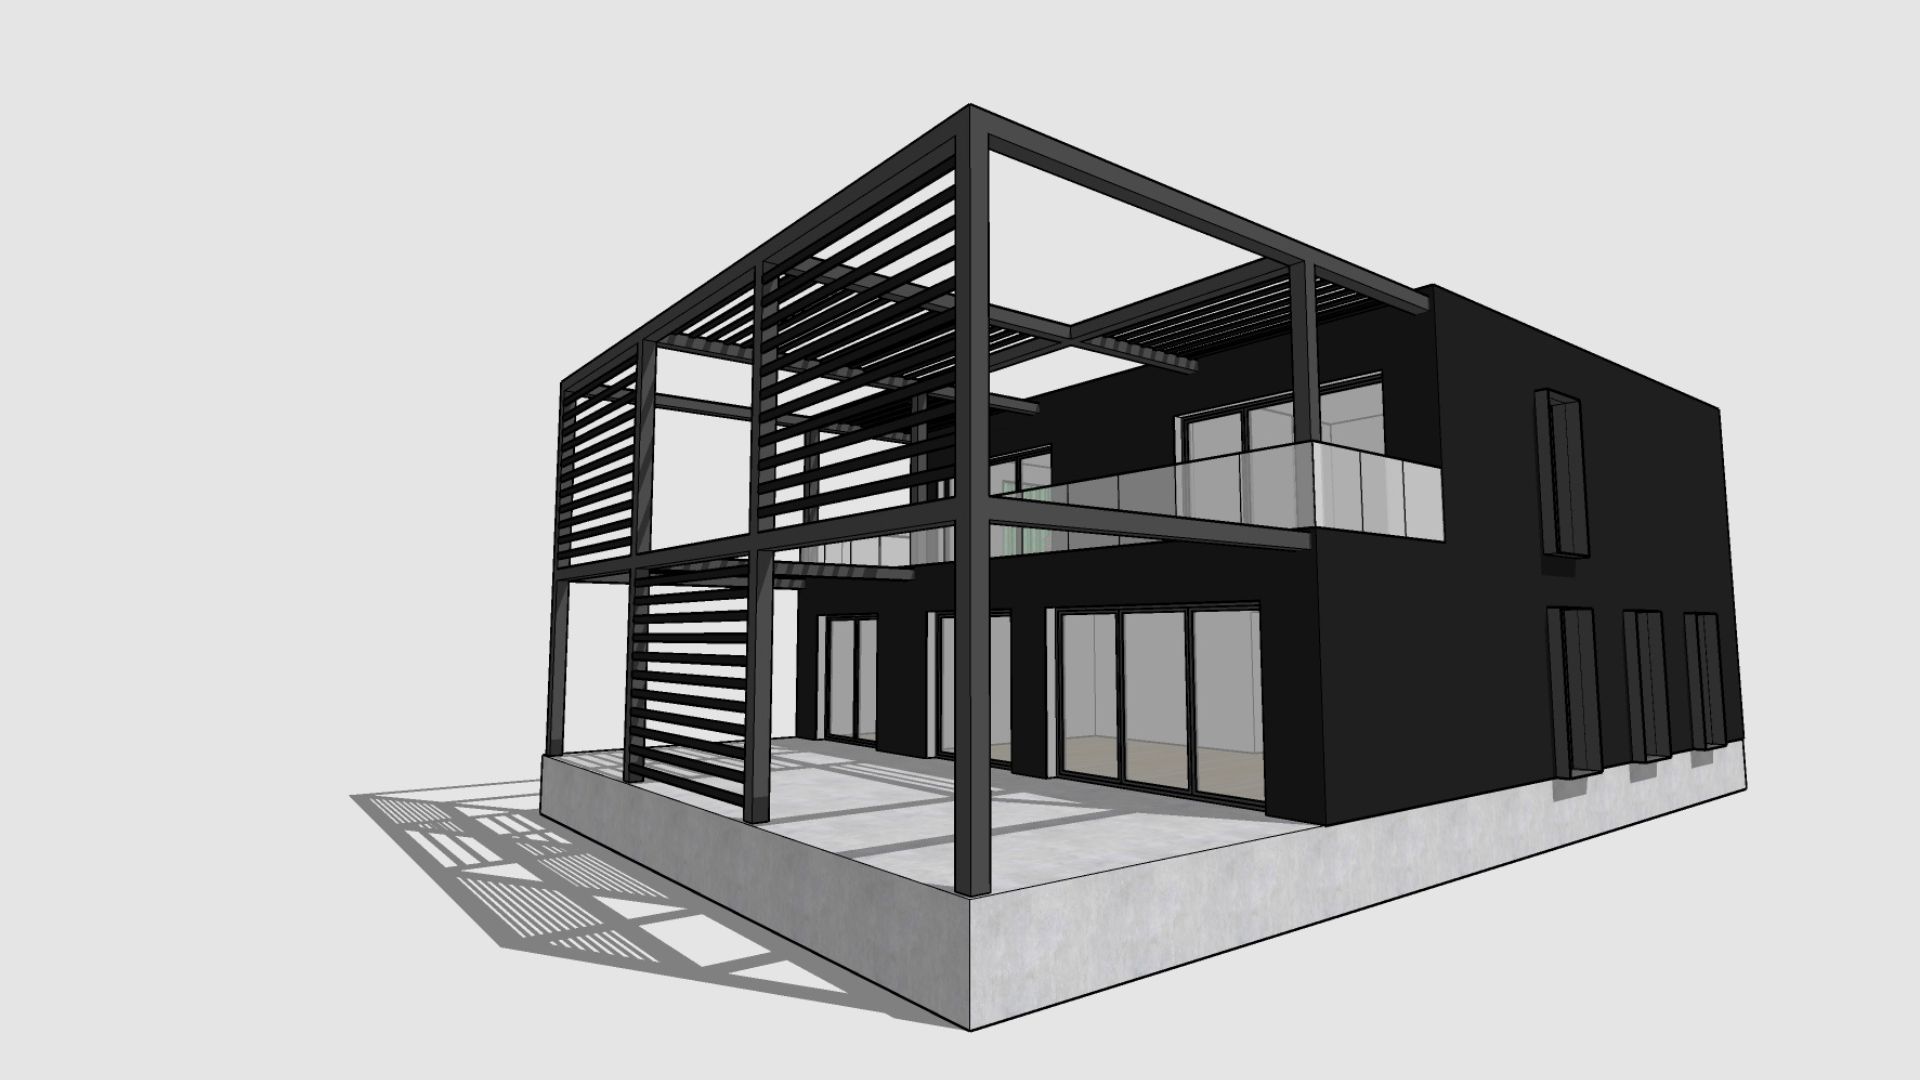 Modelo arquitectónico 3D elaborado con SketchUp por Alejandro Soriano